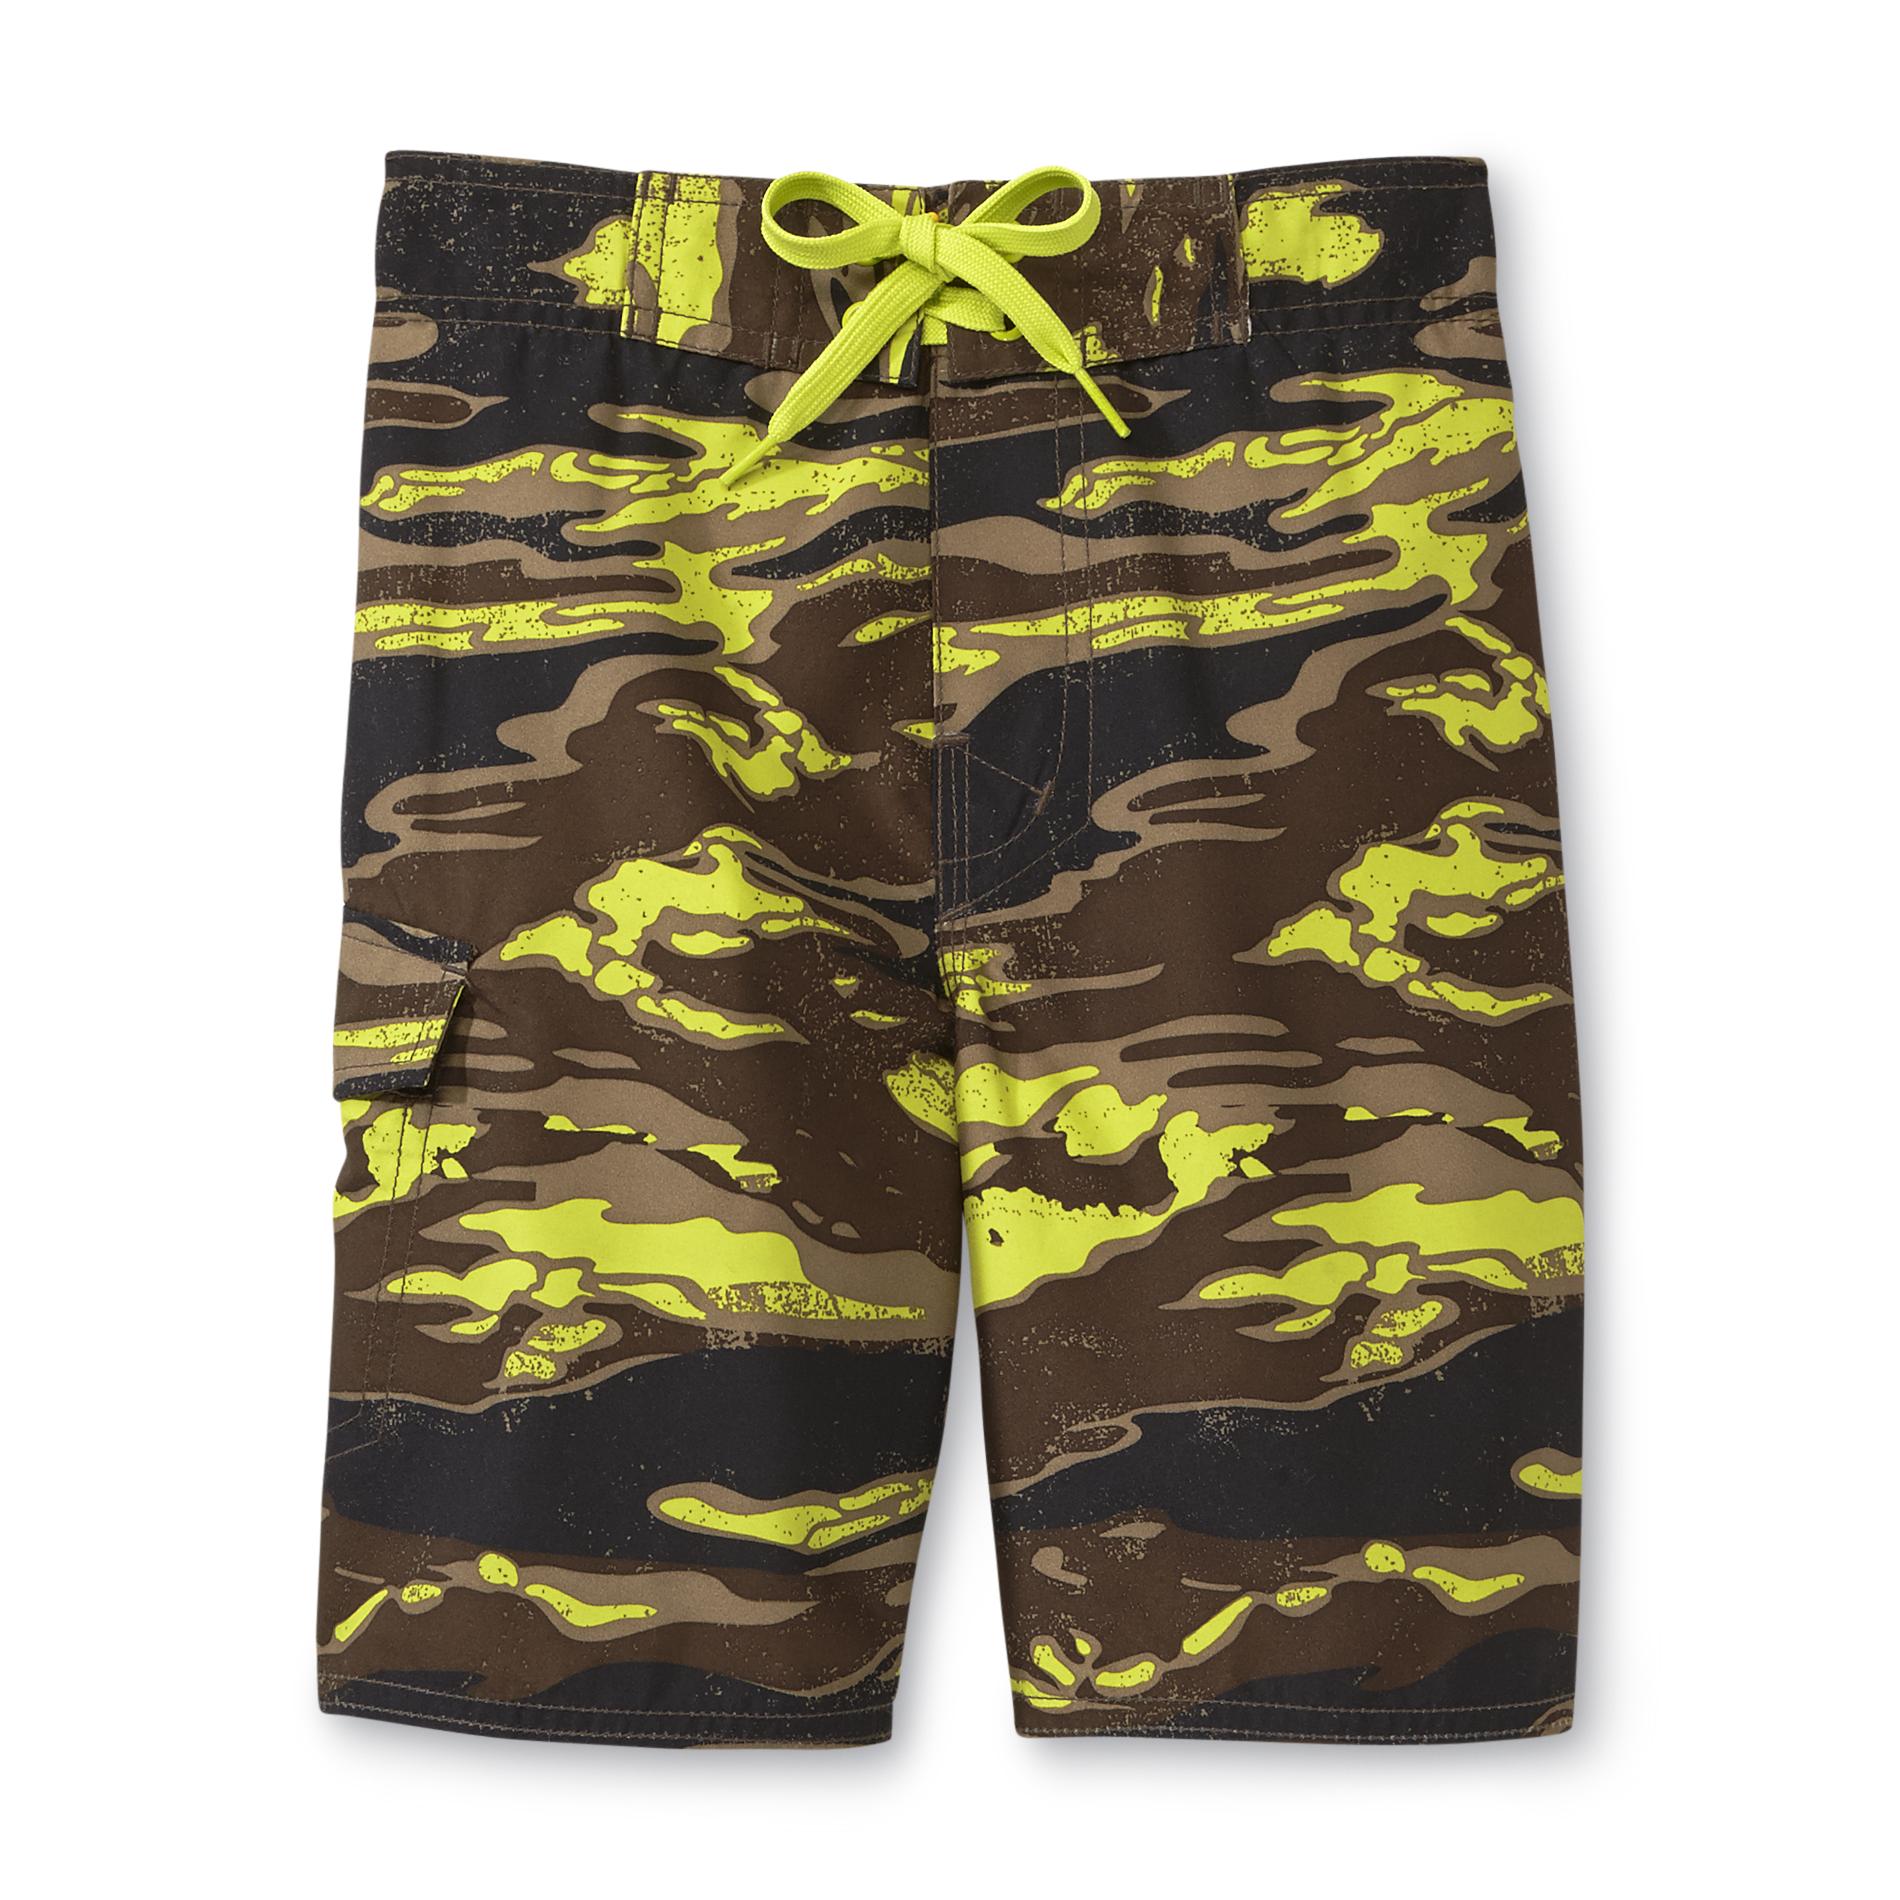 Joe Boxer Boy's Swim Trunks - Camouflage